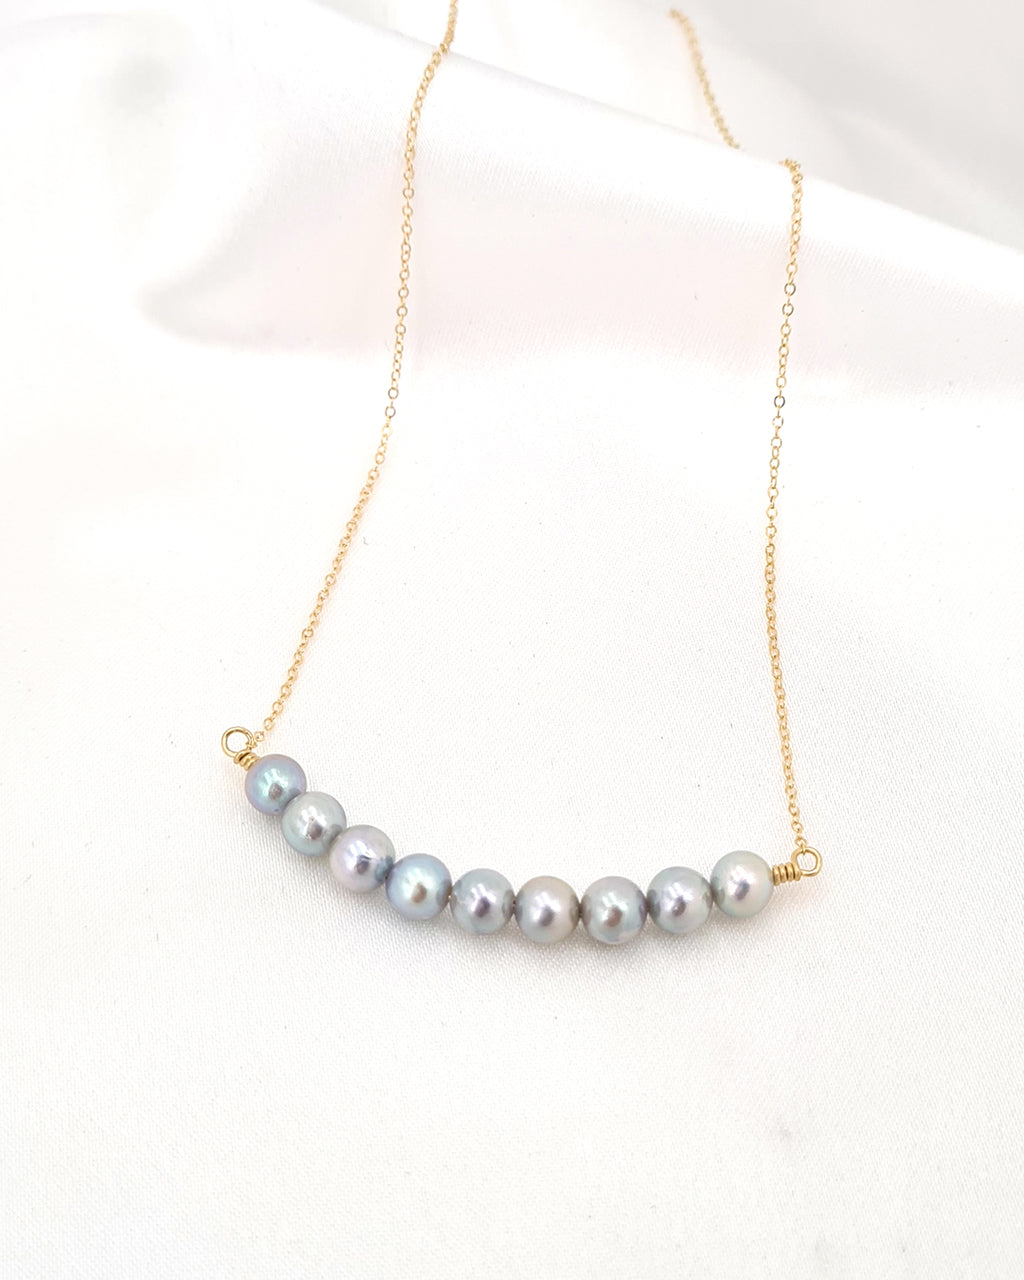 Saltwater Silver-Blue Akoya Pearl Smile Necklace | Something blue for minimalist elegant brides